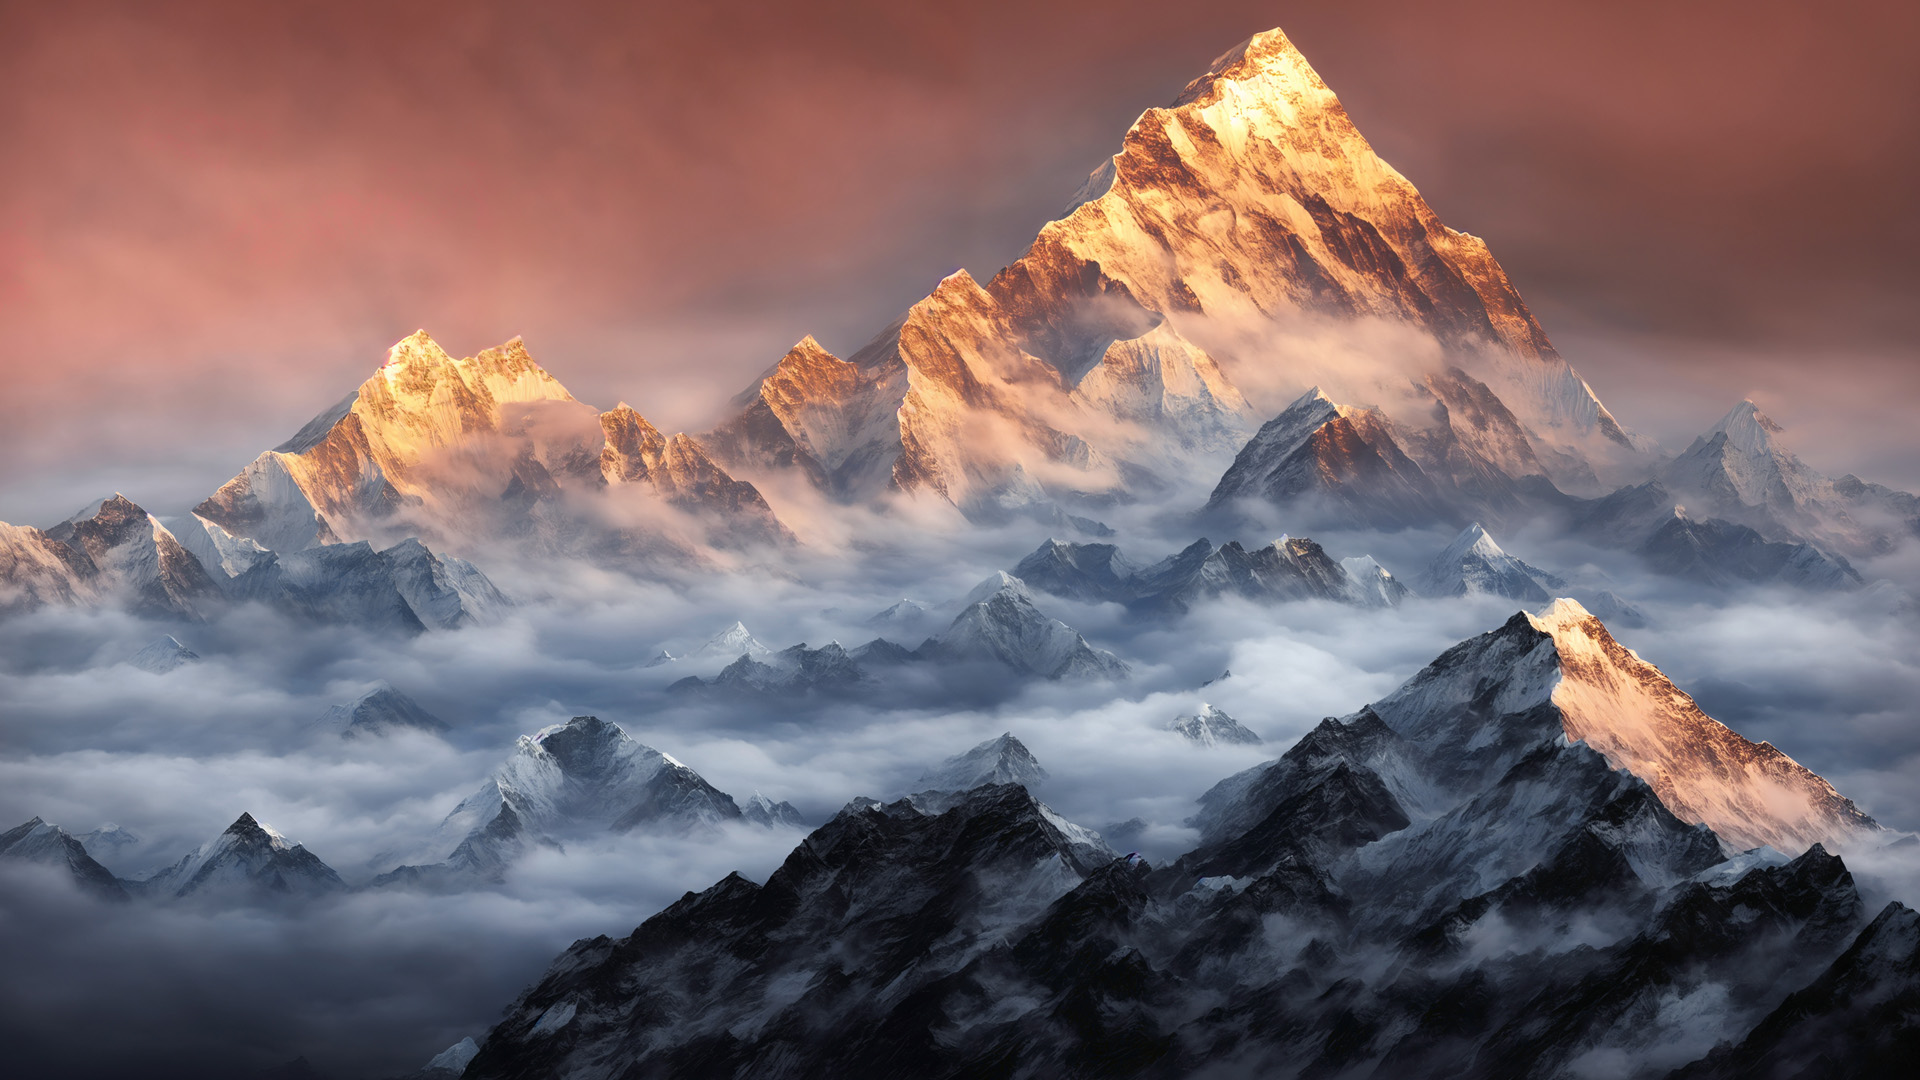 Himalayas Mount Everest During A Foggy Sunset Night Sagarmatha National Park Nepal Windows